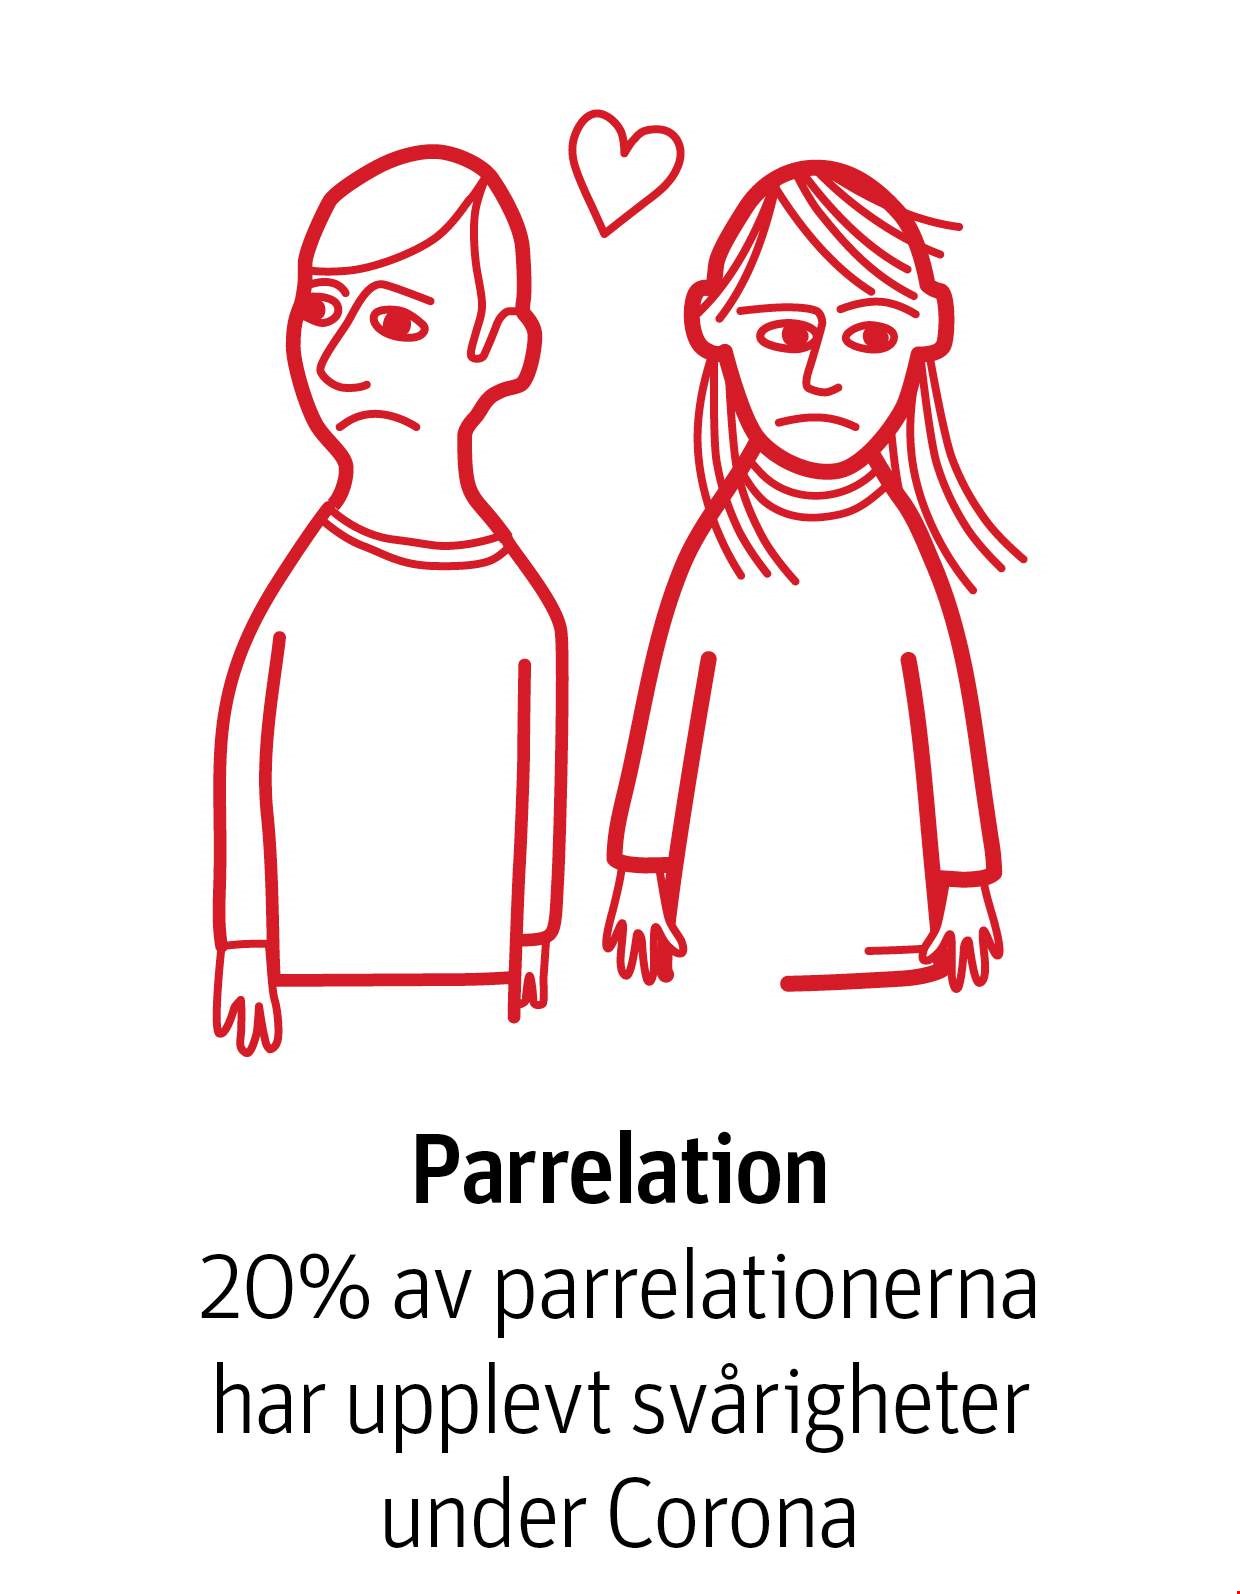 20% har haft svårt i parrelationer